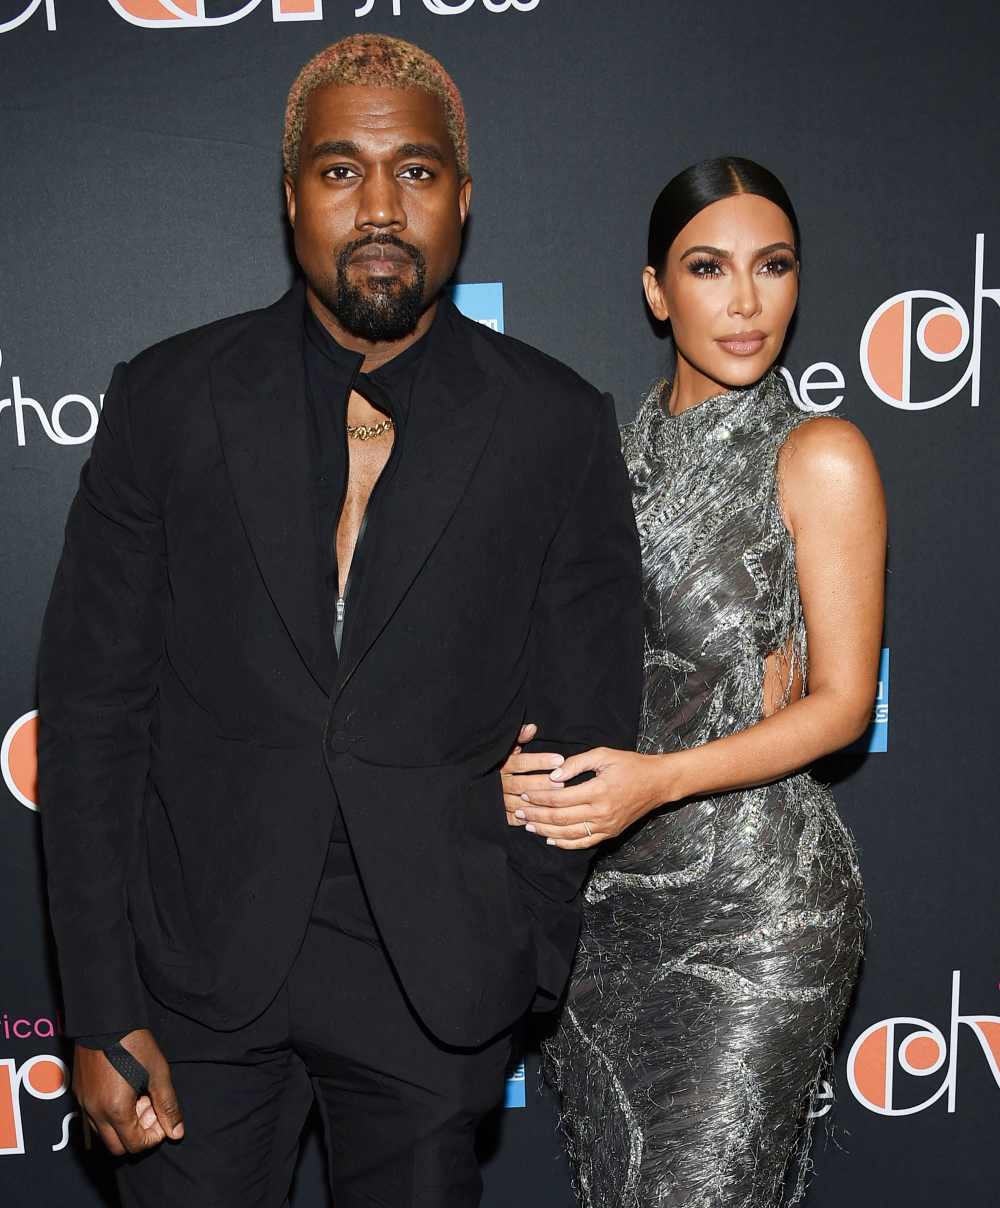 Kim Kardashian Is ‘Taking Things Day by Day’ Following Divorce